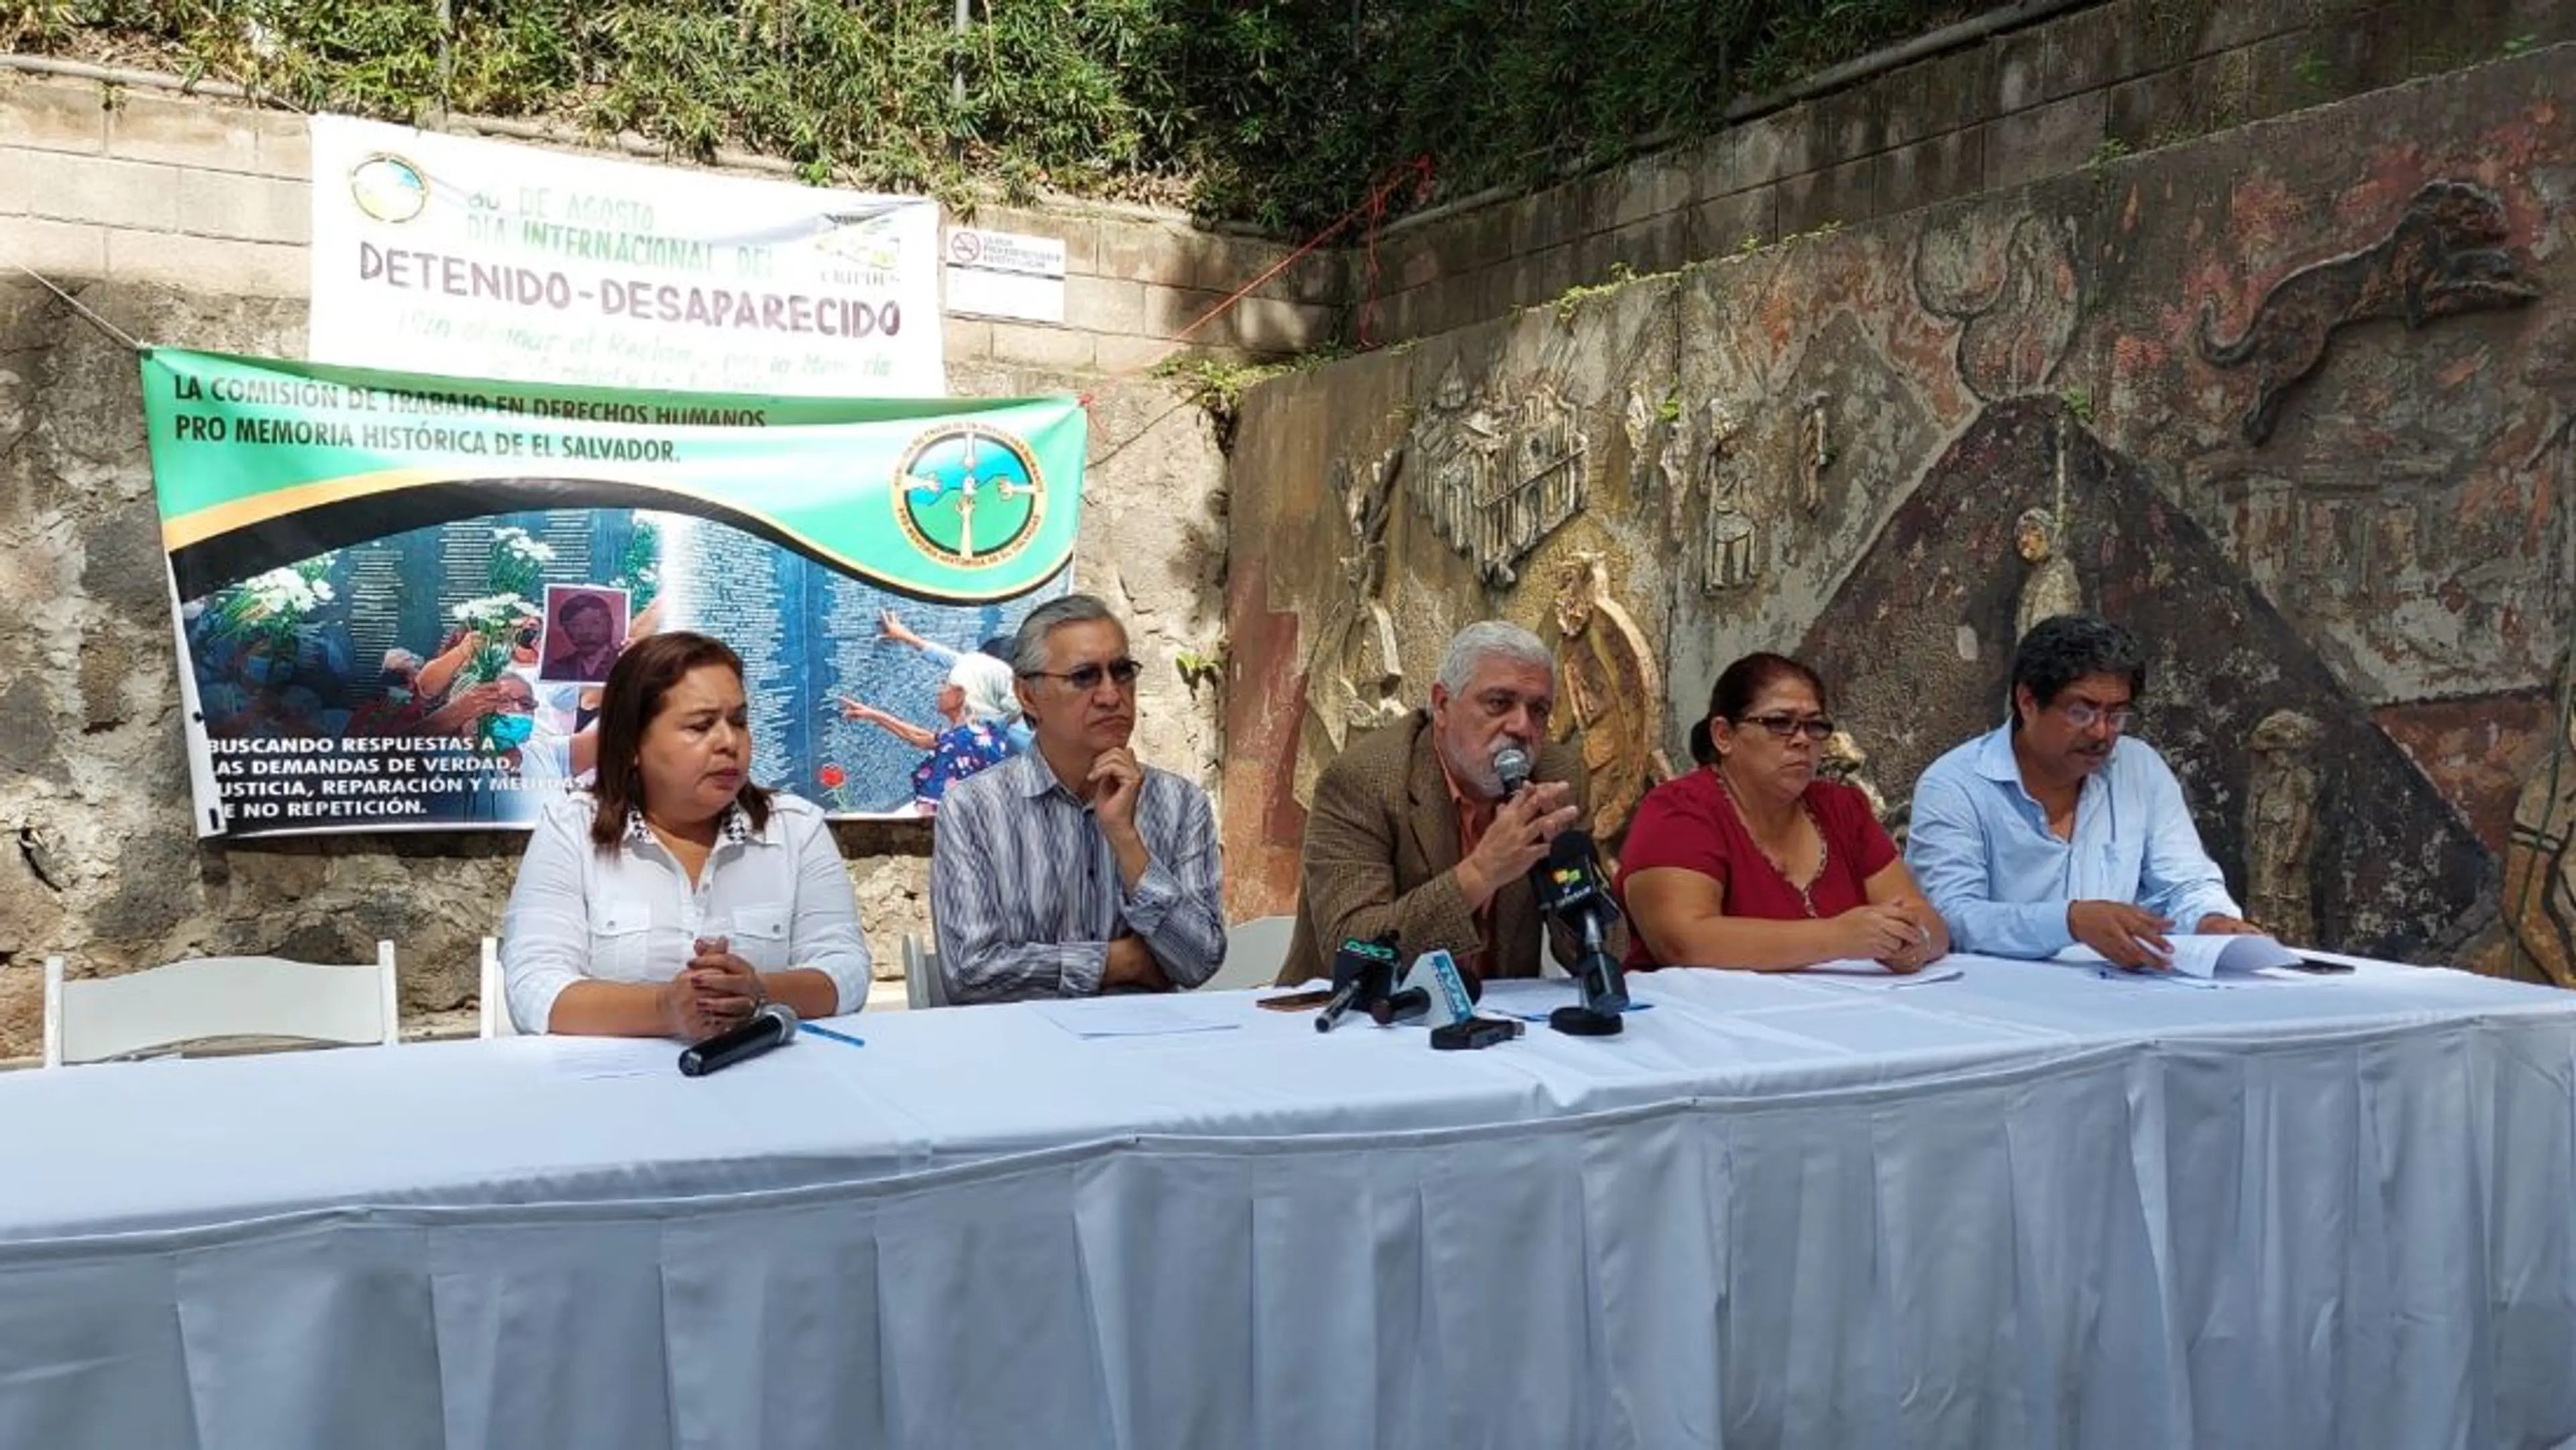 Members of Tutela Legal denouncing illegal detentions